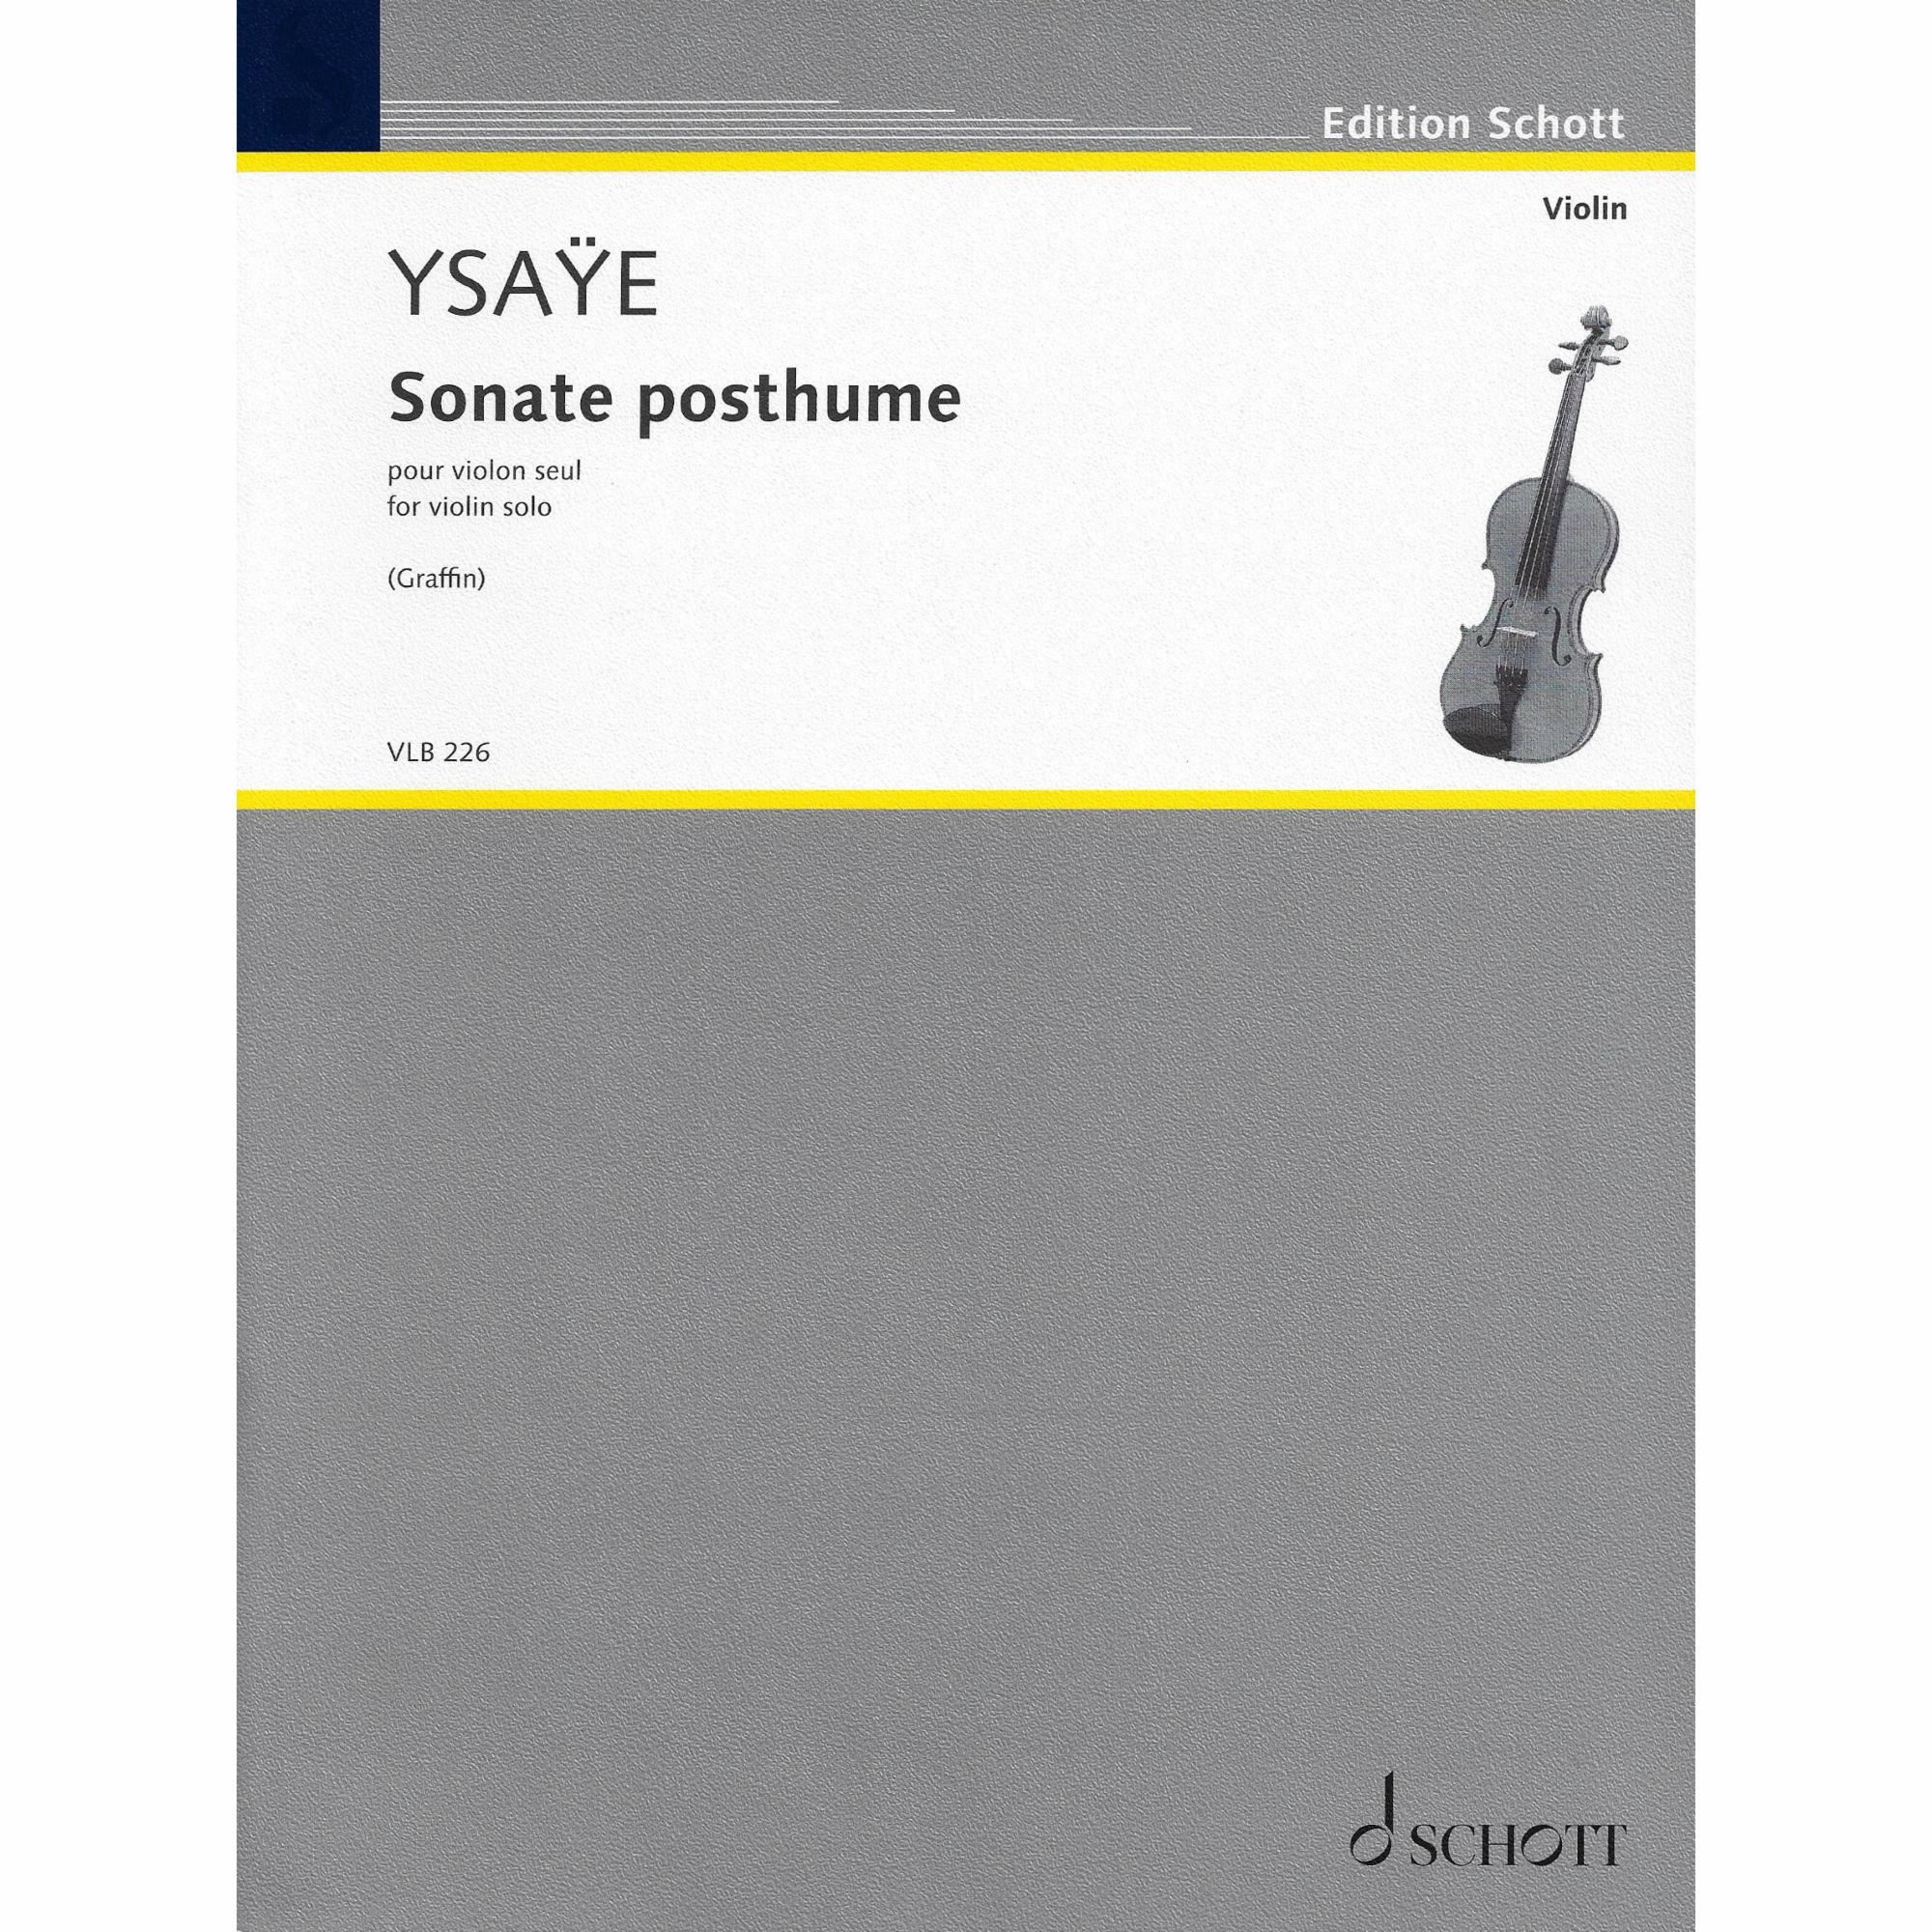 Ysaye -- Sonate posthume, Op. 27bis for Solo Violin